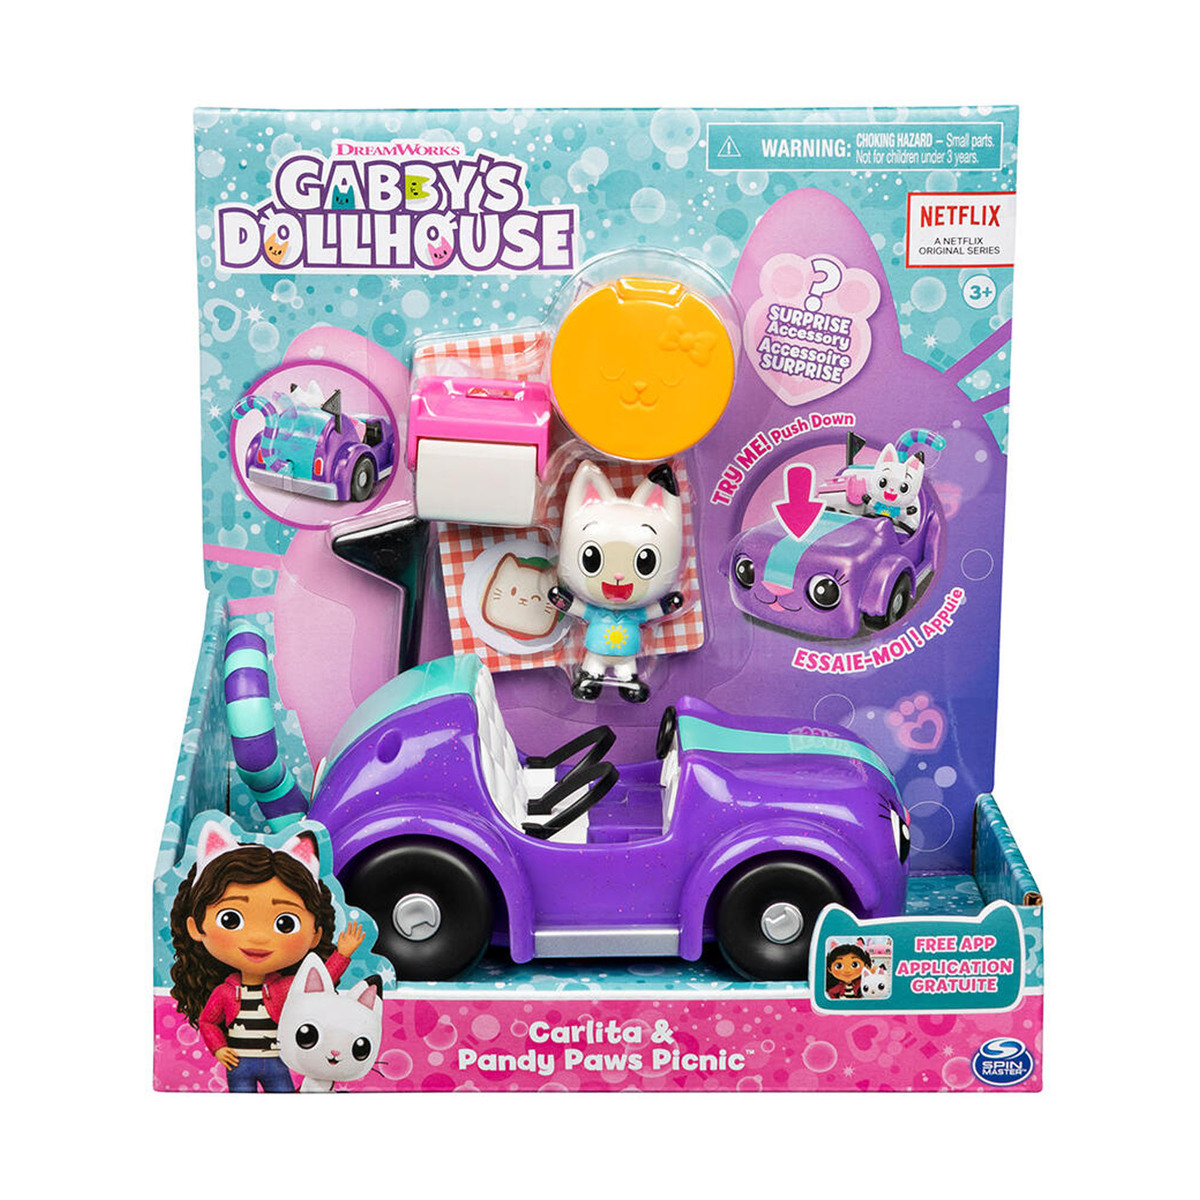 Gabby's Dollhouse Carlita & Pandy Paws Picnic Vehicle, 6062145